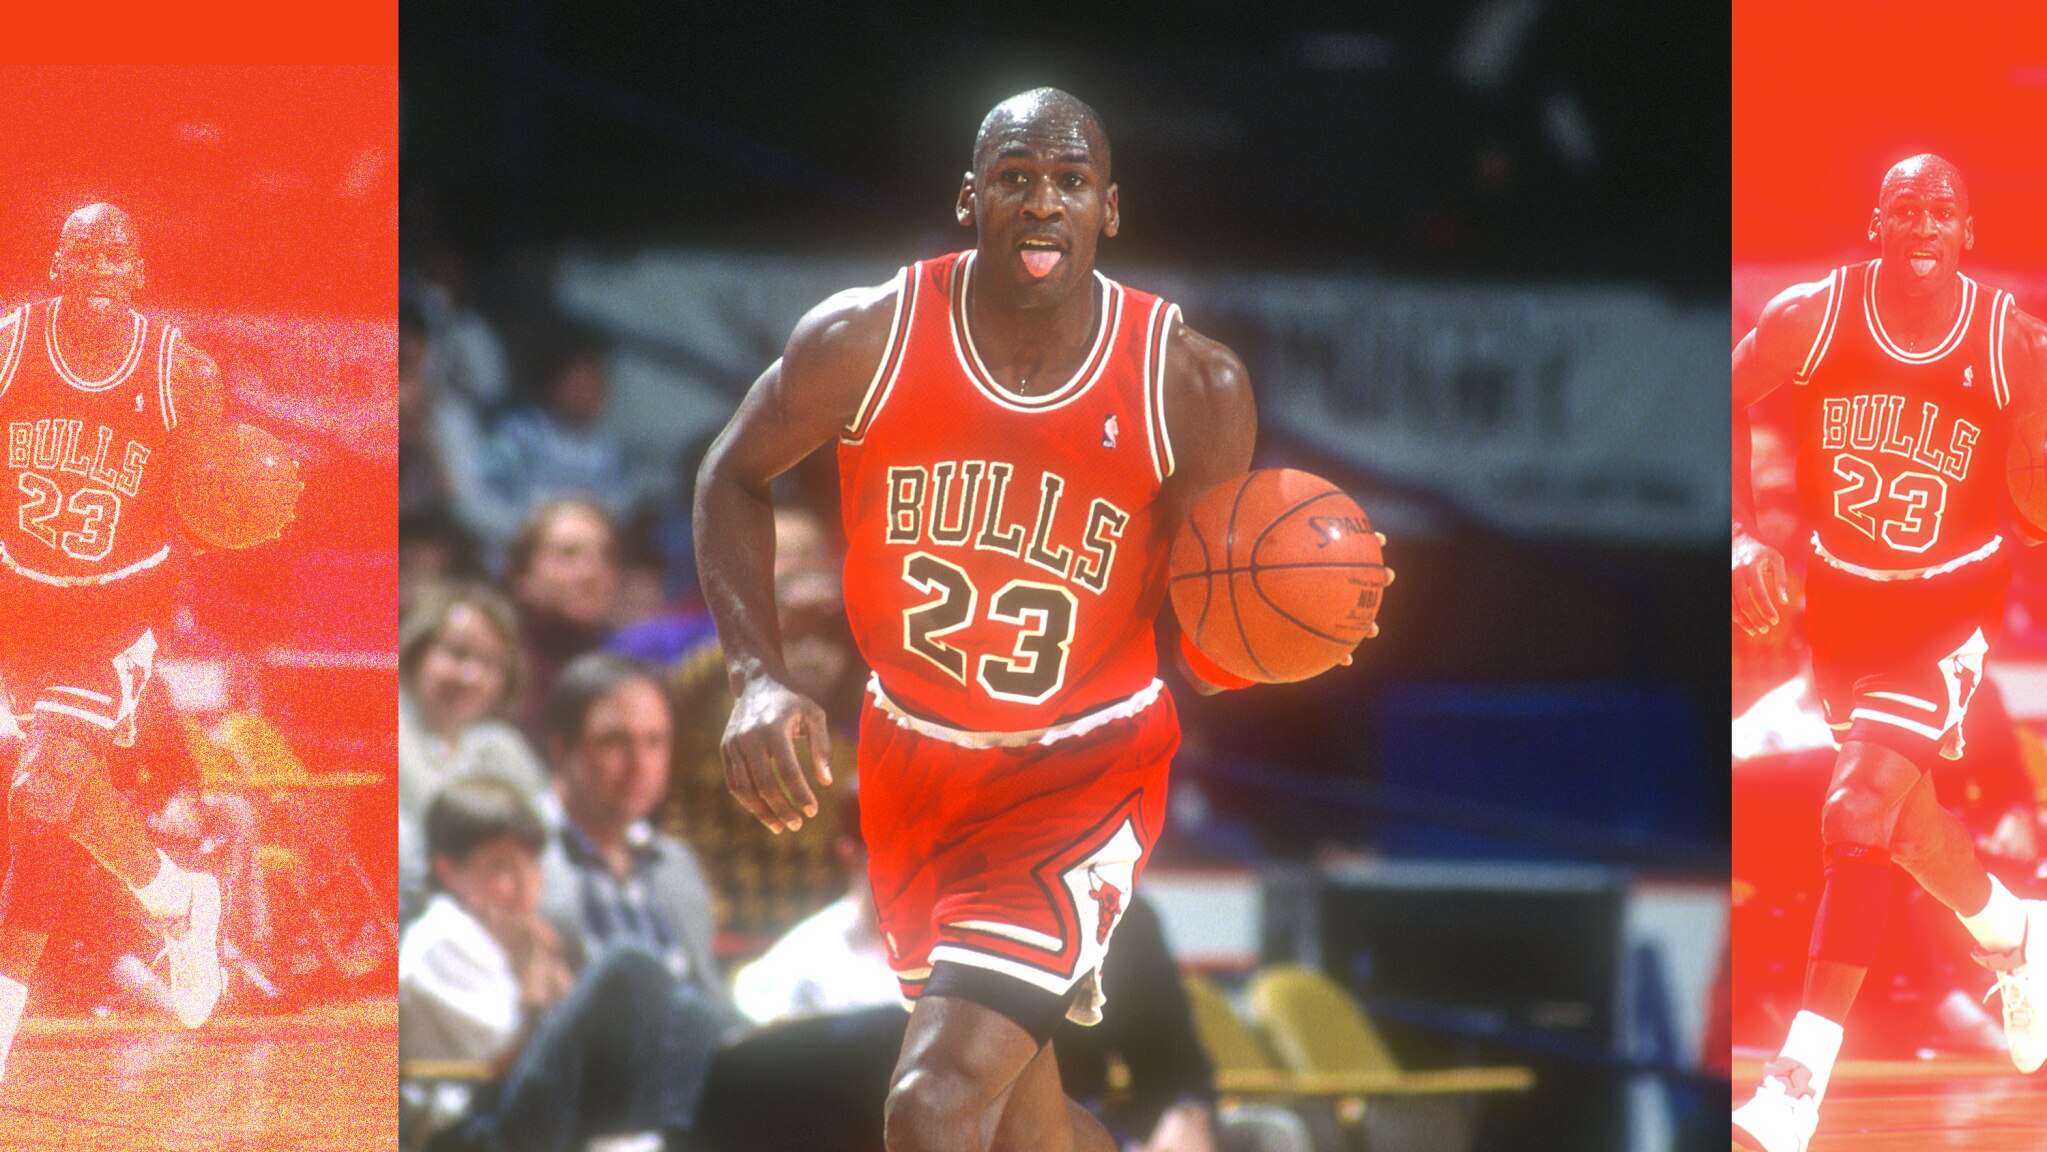 Michael Jordan and Bulls documentary The Last Dance hugely popular